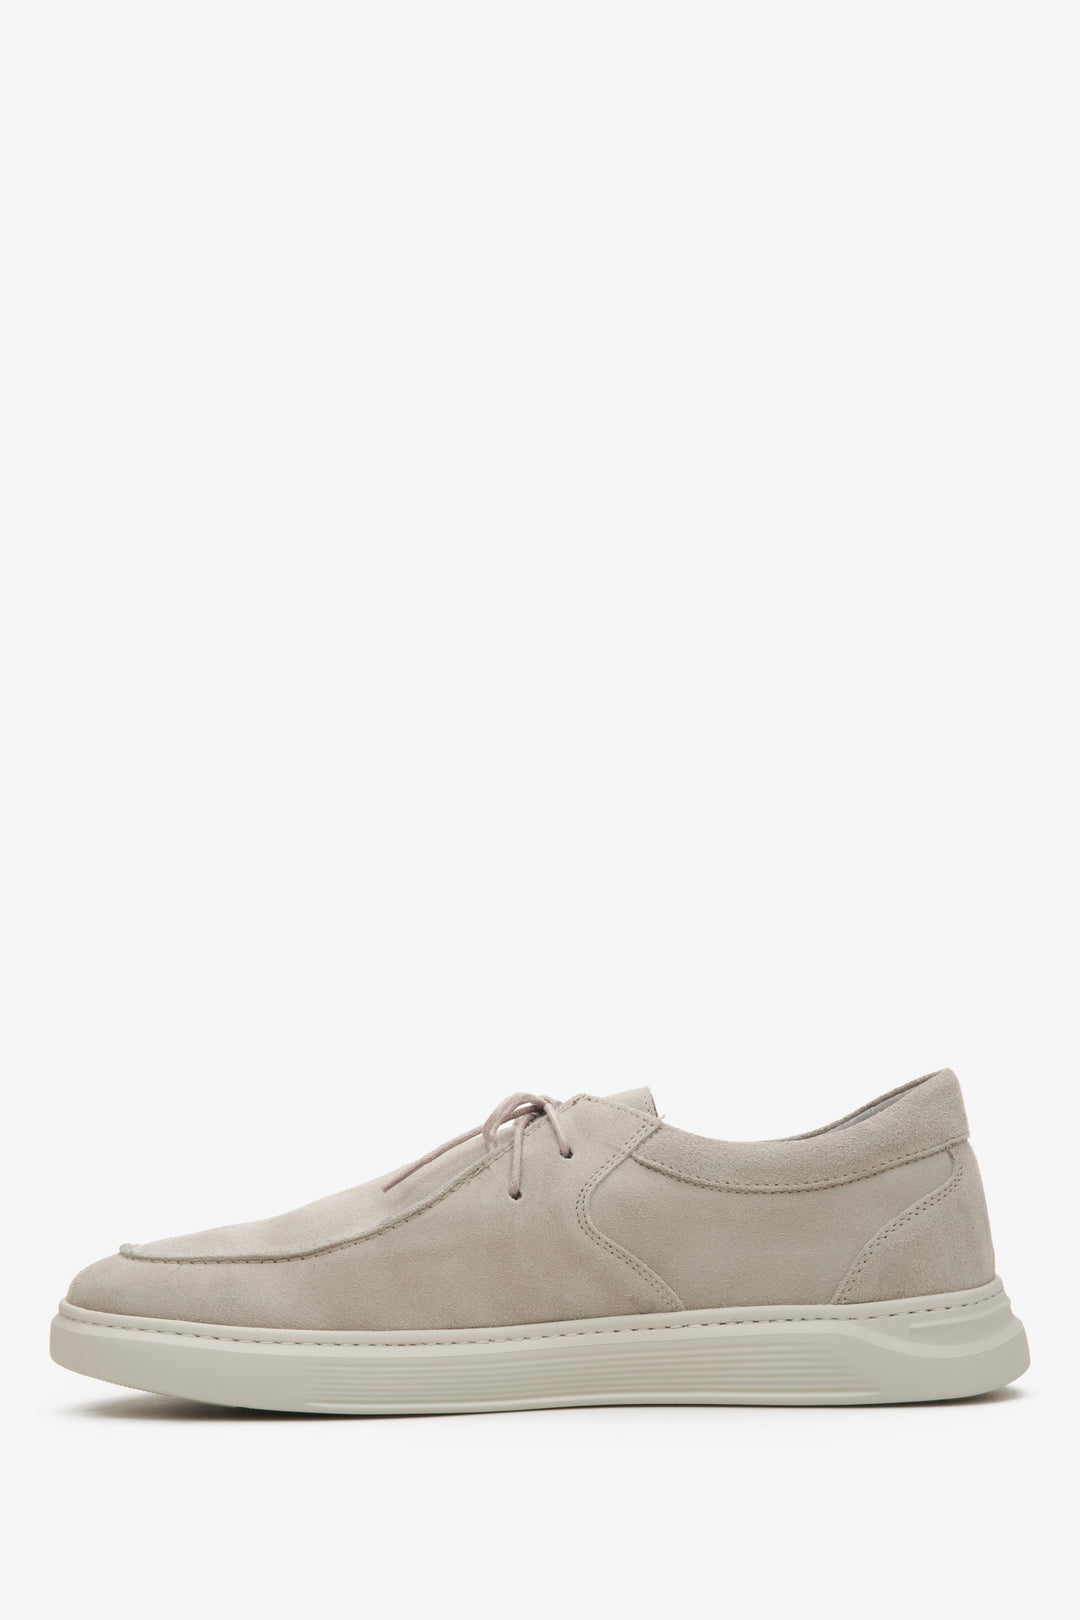 Estro beige soft velour men's loafers - side profile of the shoe.